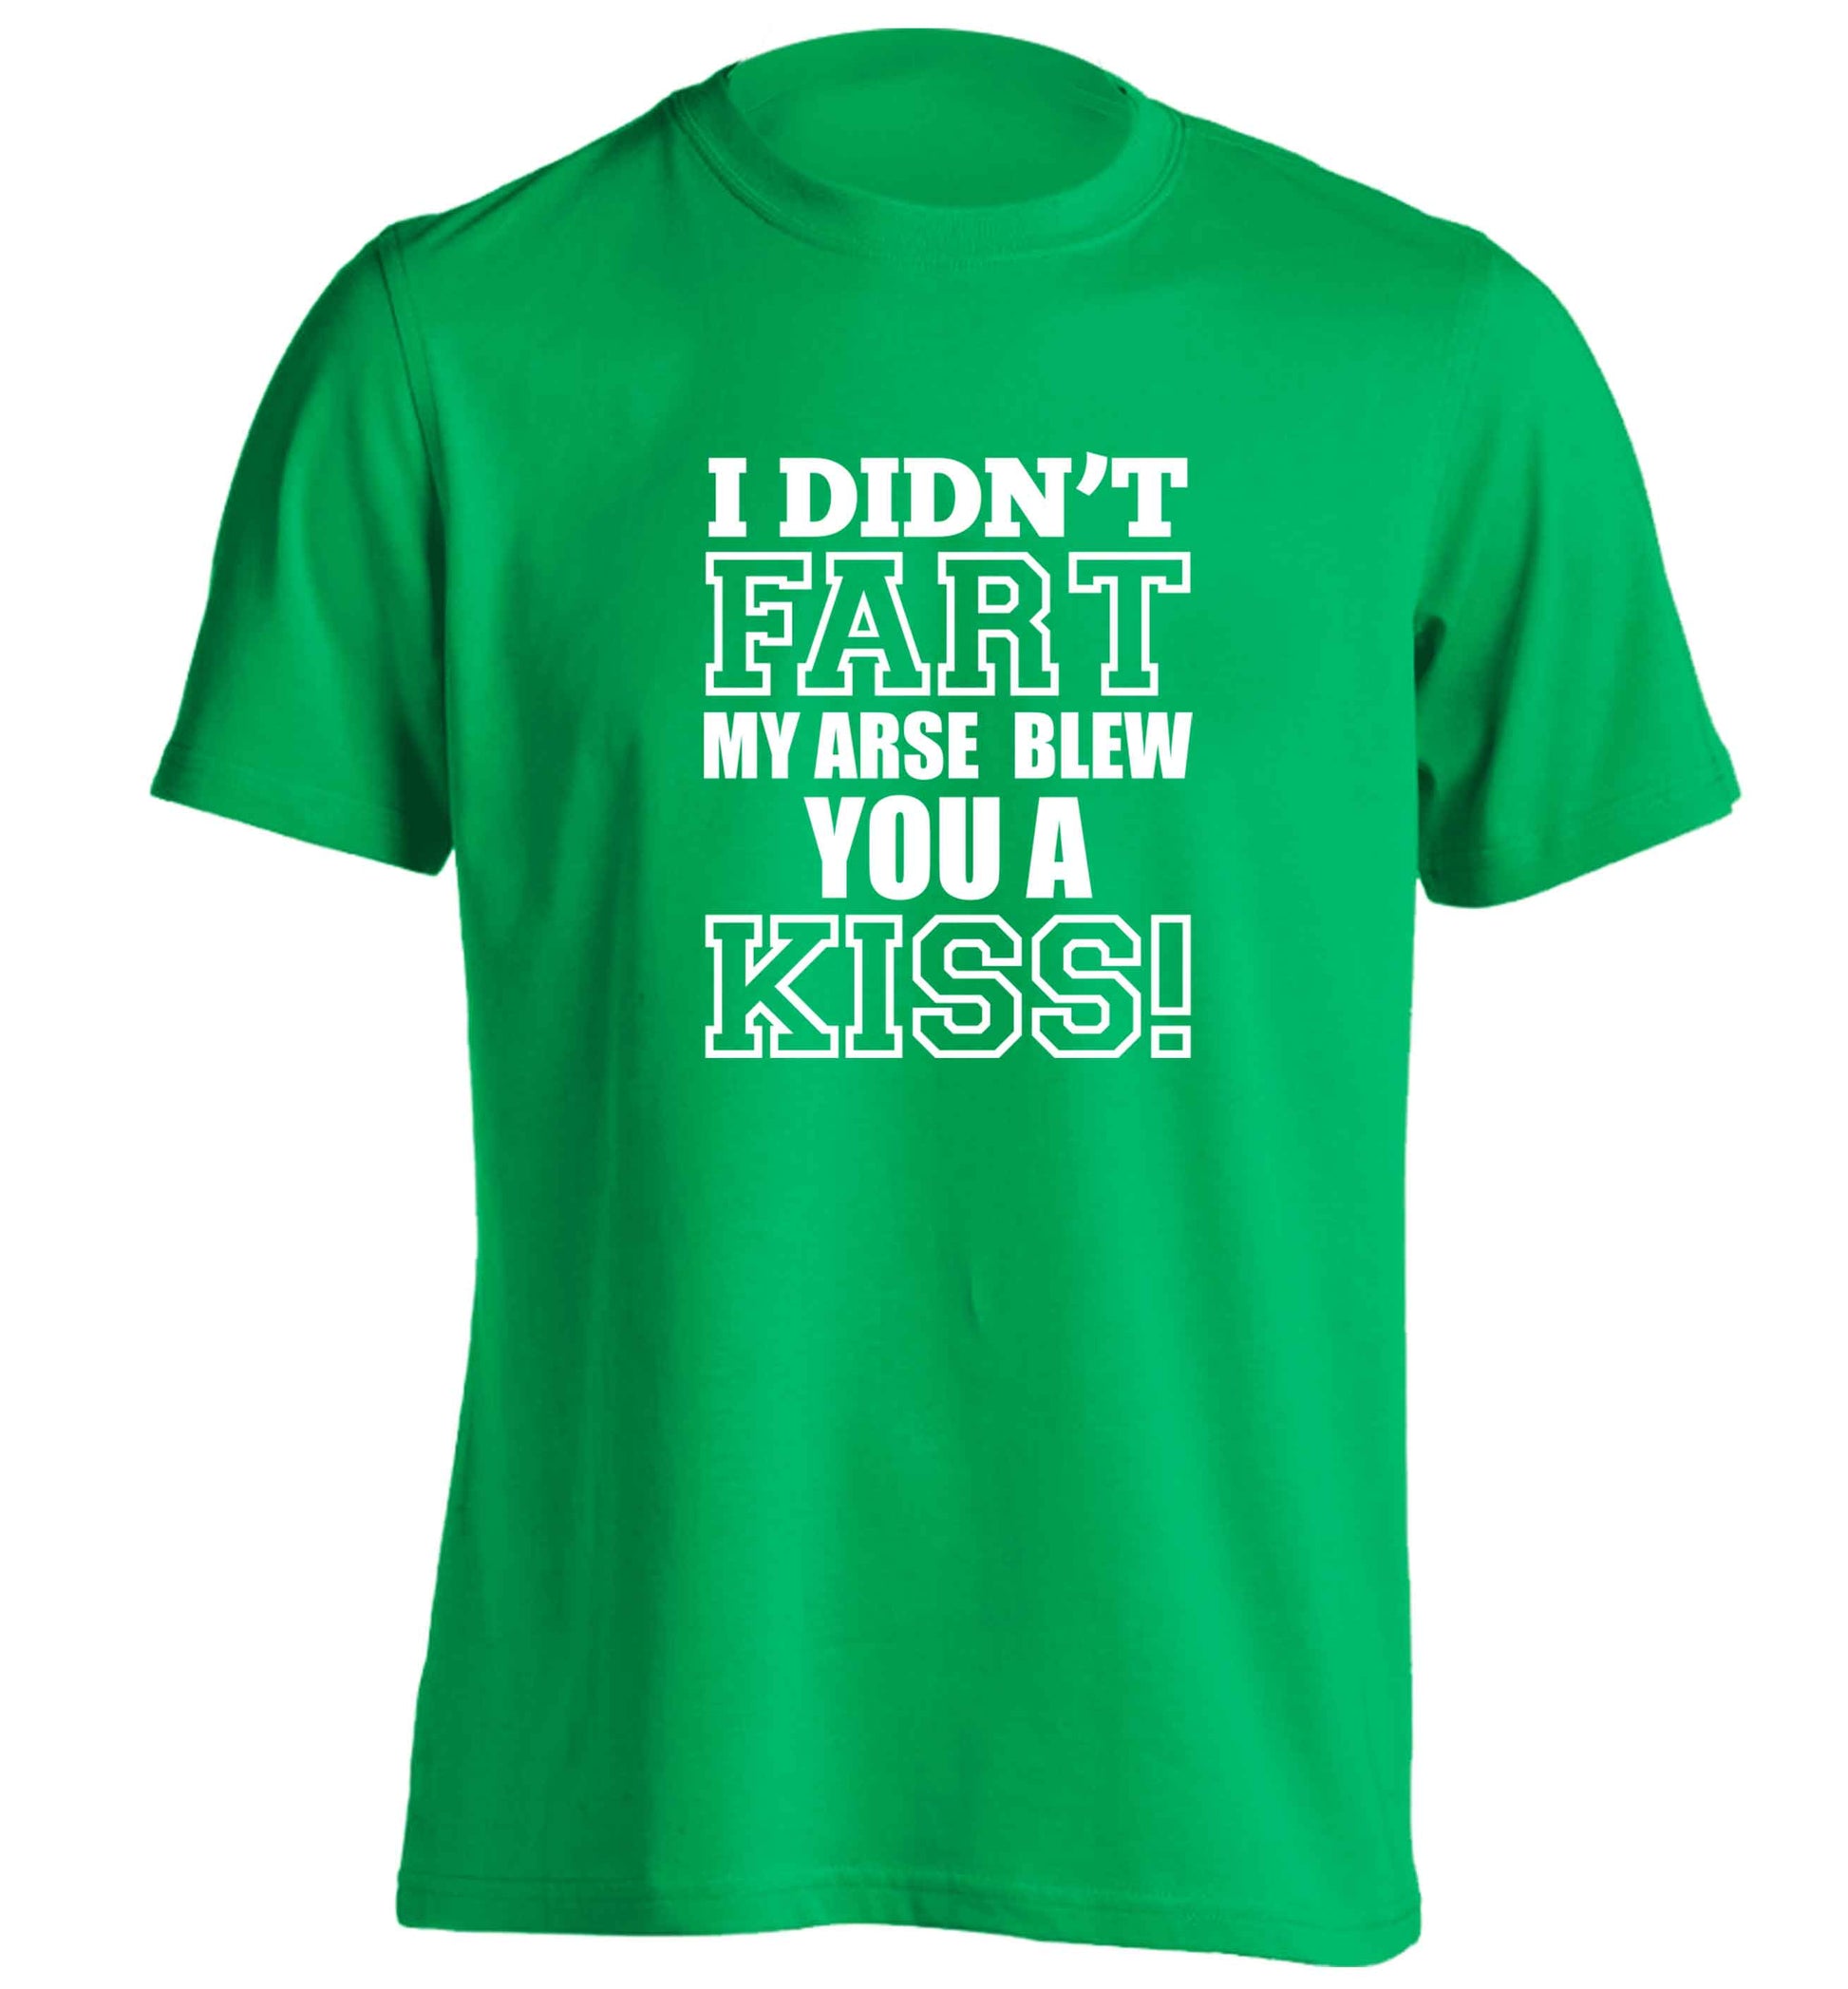 I didn't fart my arse blew you a kiss adults unisex green Tshirt 2XL